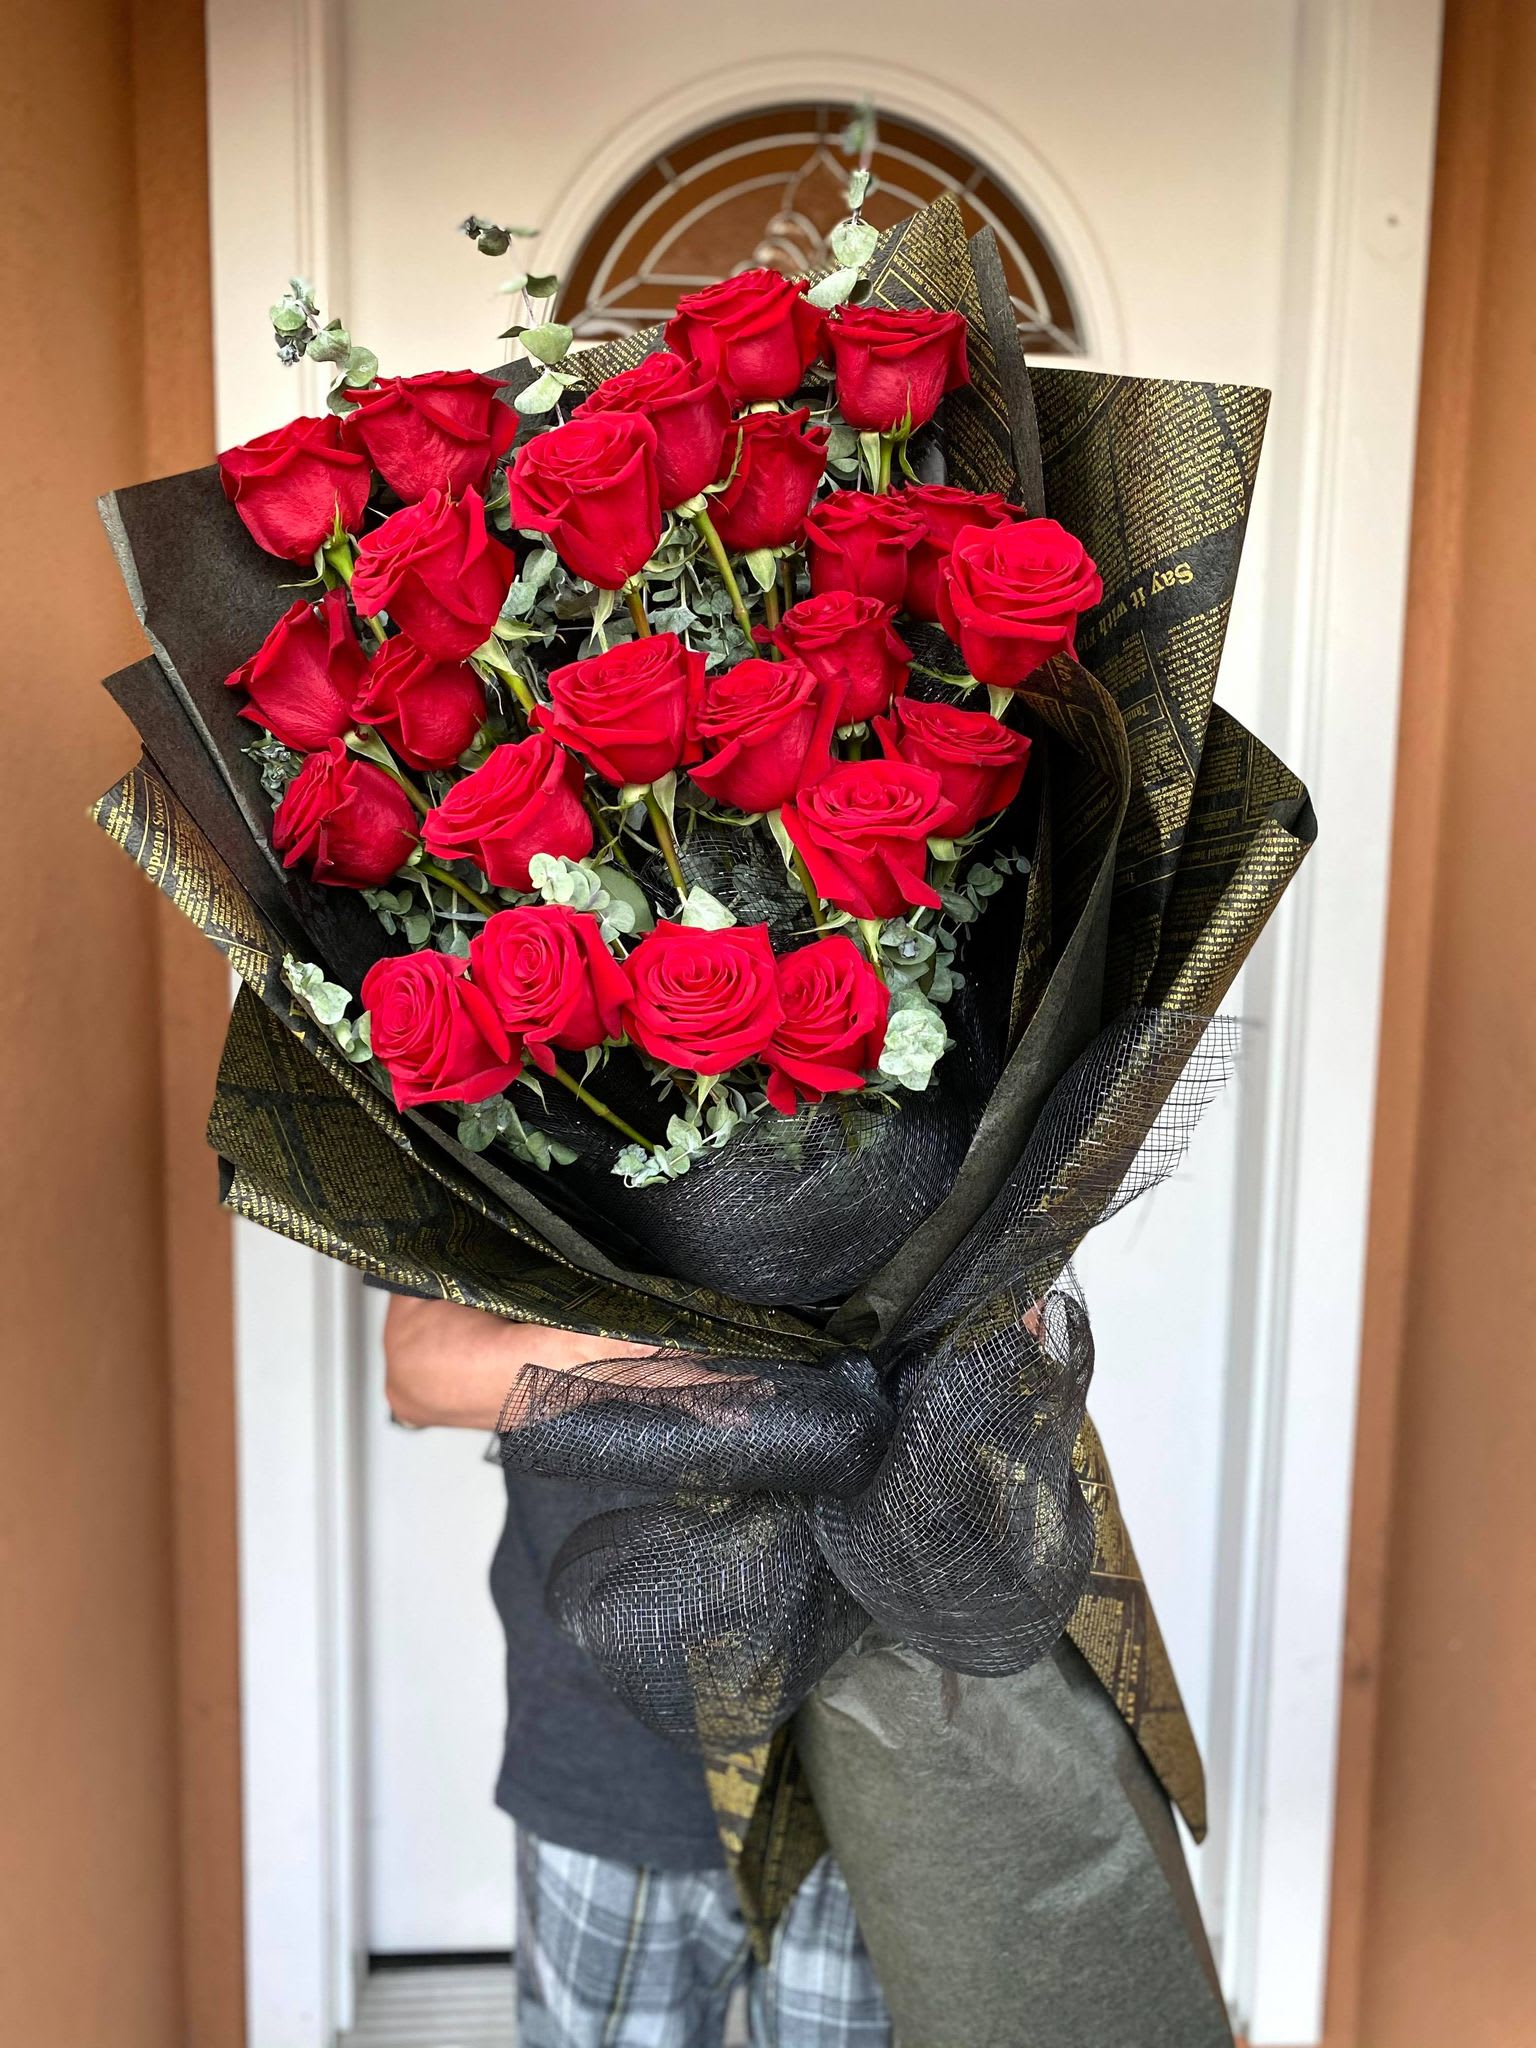 XXL Edition: Premium Signature Red Roses Bouquet in Fountain Valley, CA